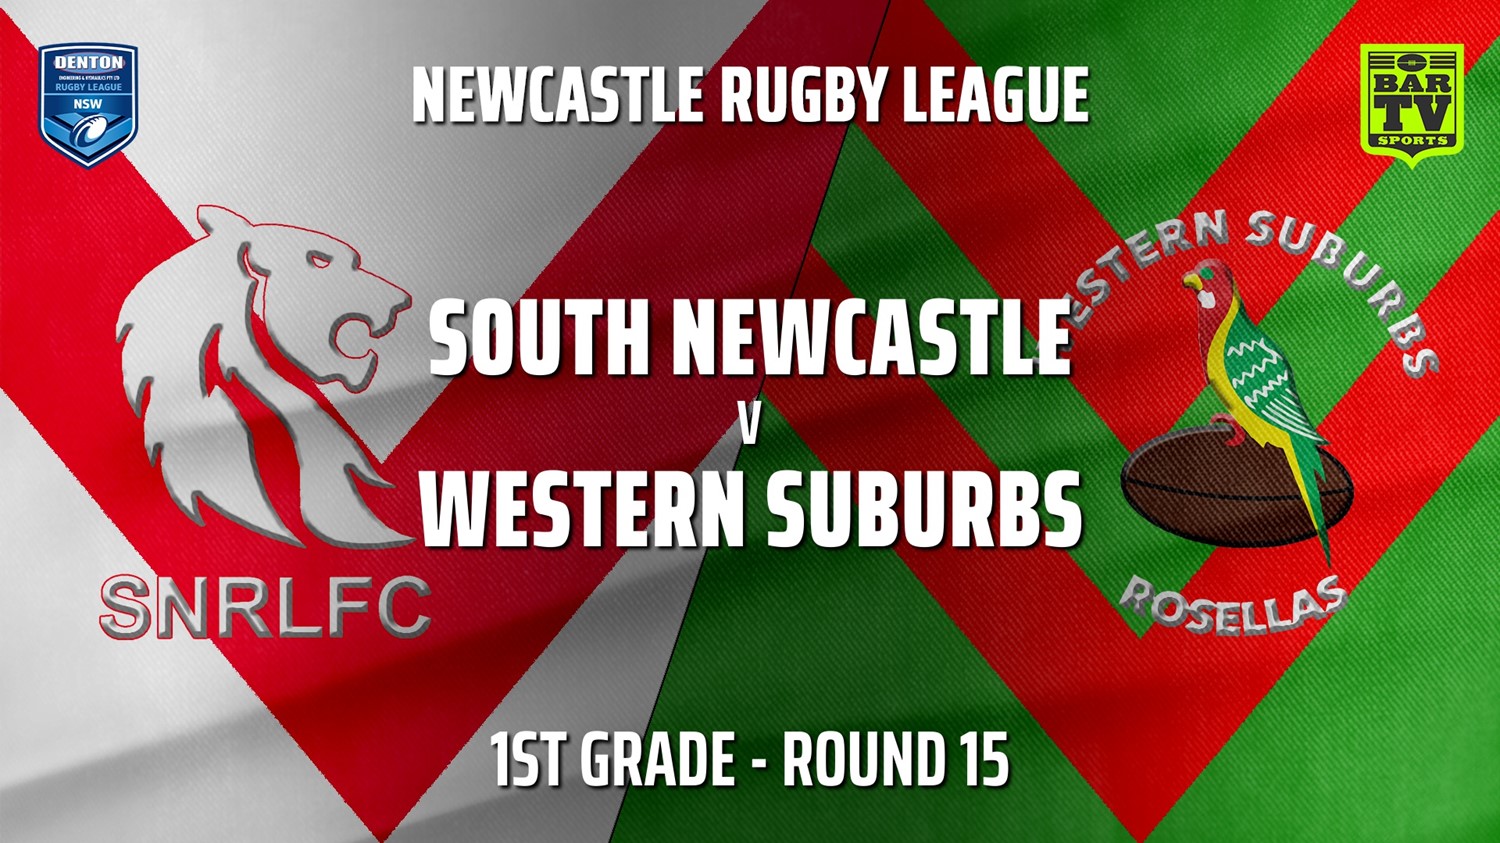 210717-Newcastle Round 15 - 1st Grade - South Newcastle v Western Suburbs Rosellas Minigame Slate Image